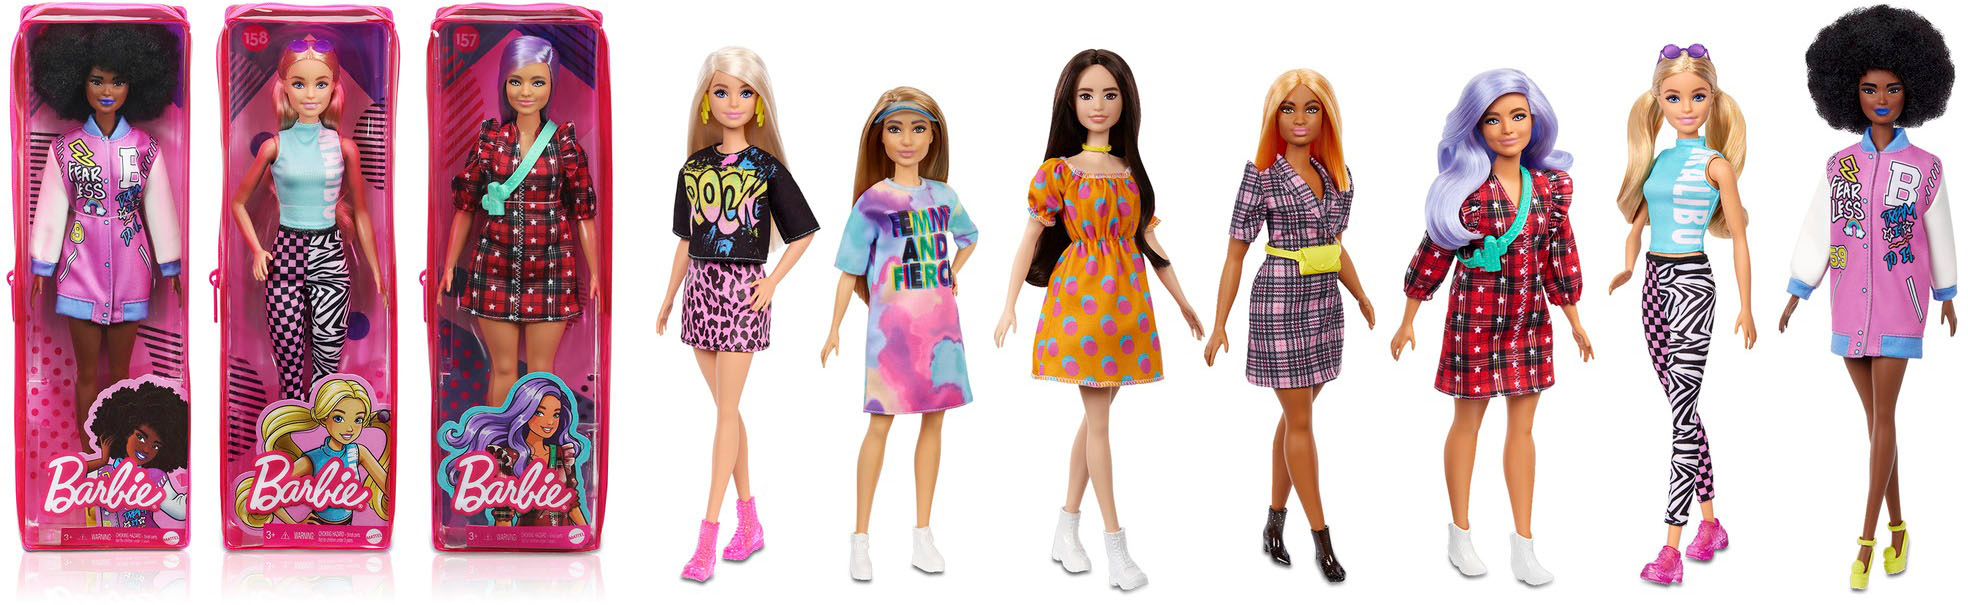 2018 barbie fashionistas